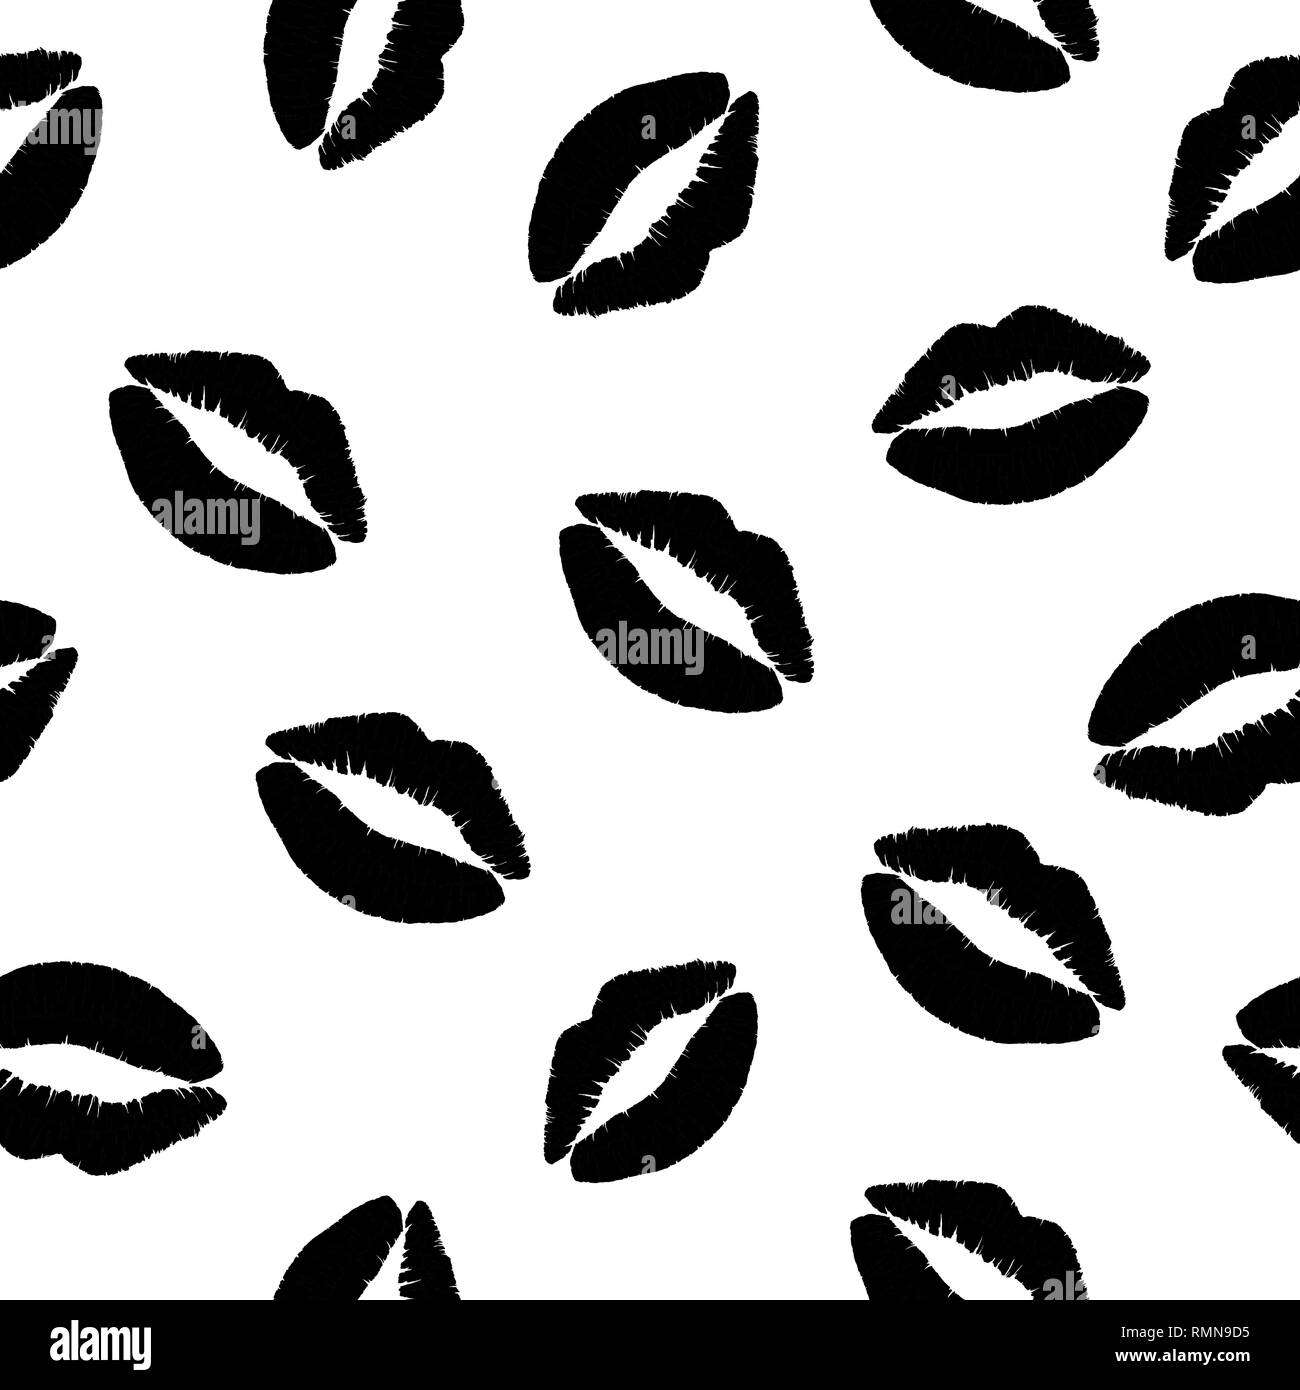 Lipstick kiss seamless pattern. for textile, web, surface design, scrapbook Stock Vector